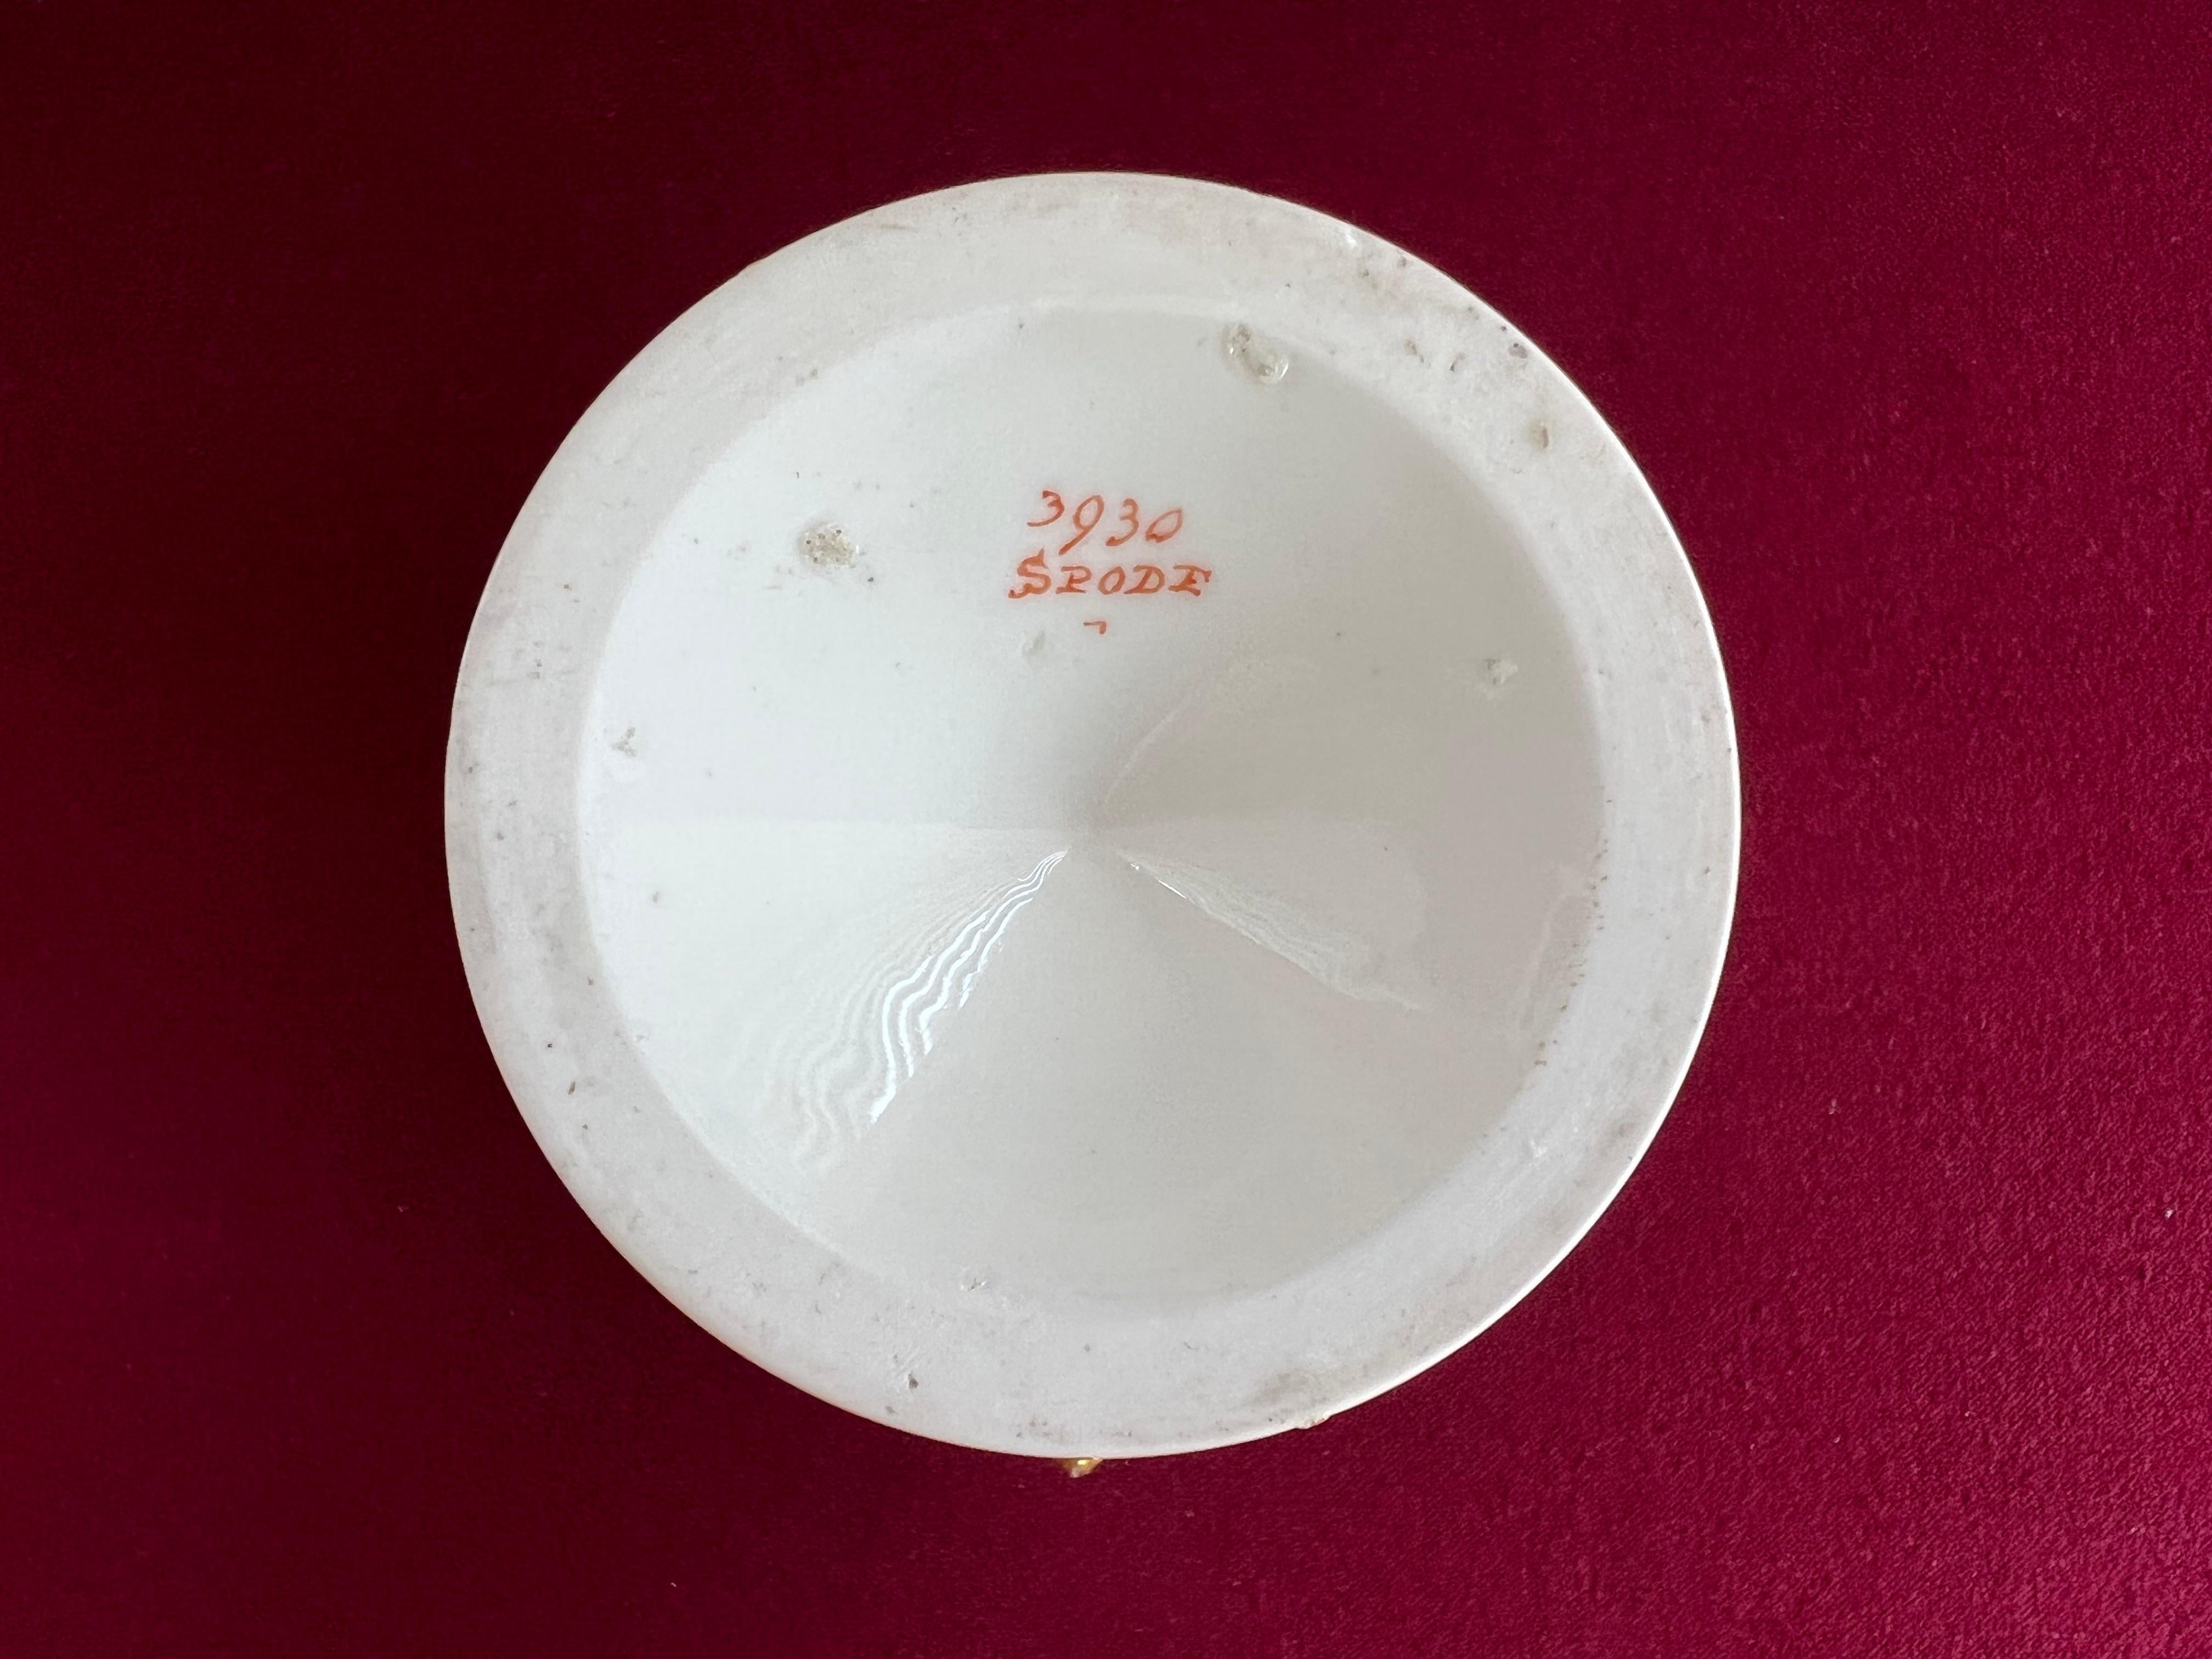 Rare Spode Porcelain Shell Decorated Vase Pattern 3930 C.1824 For Sale 1